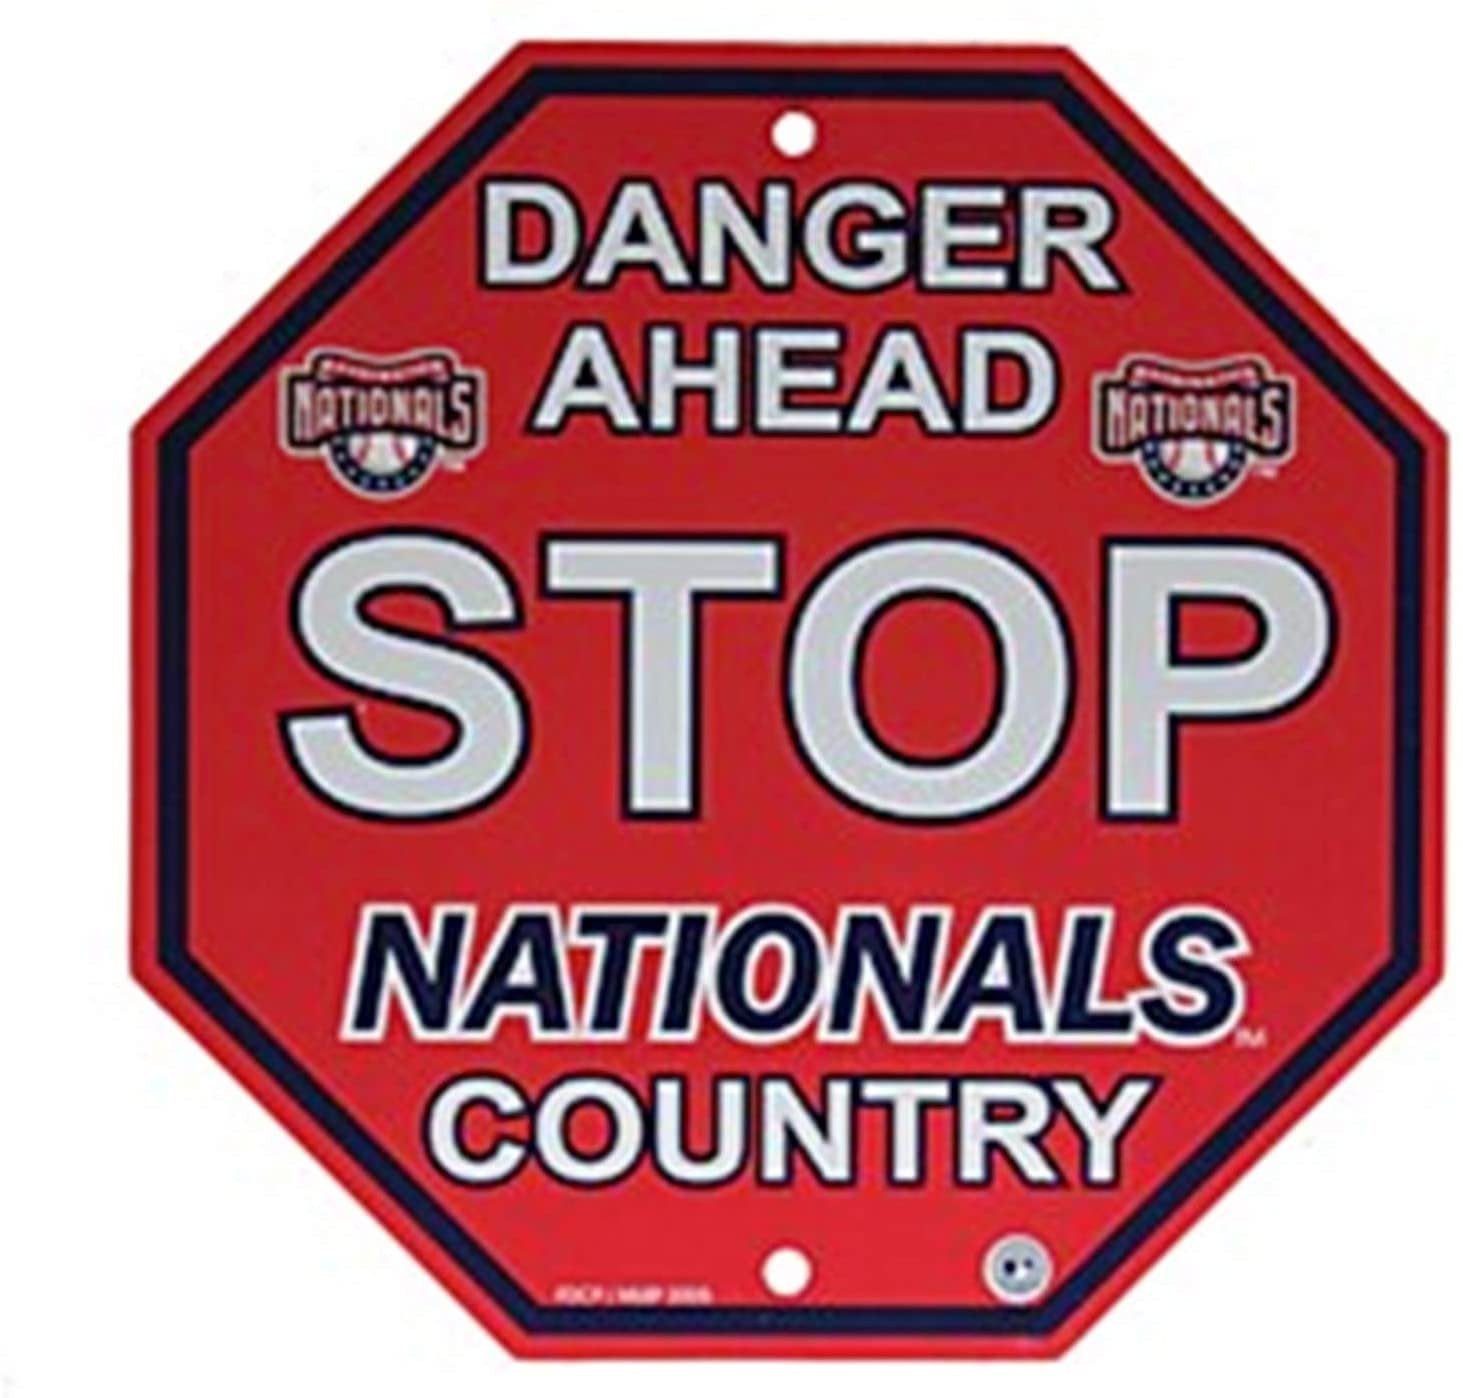 Washington Nationals 12" Plastic Wall Stop Sign Country Danger Ahead Baseball